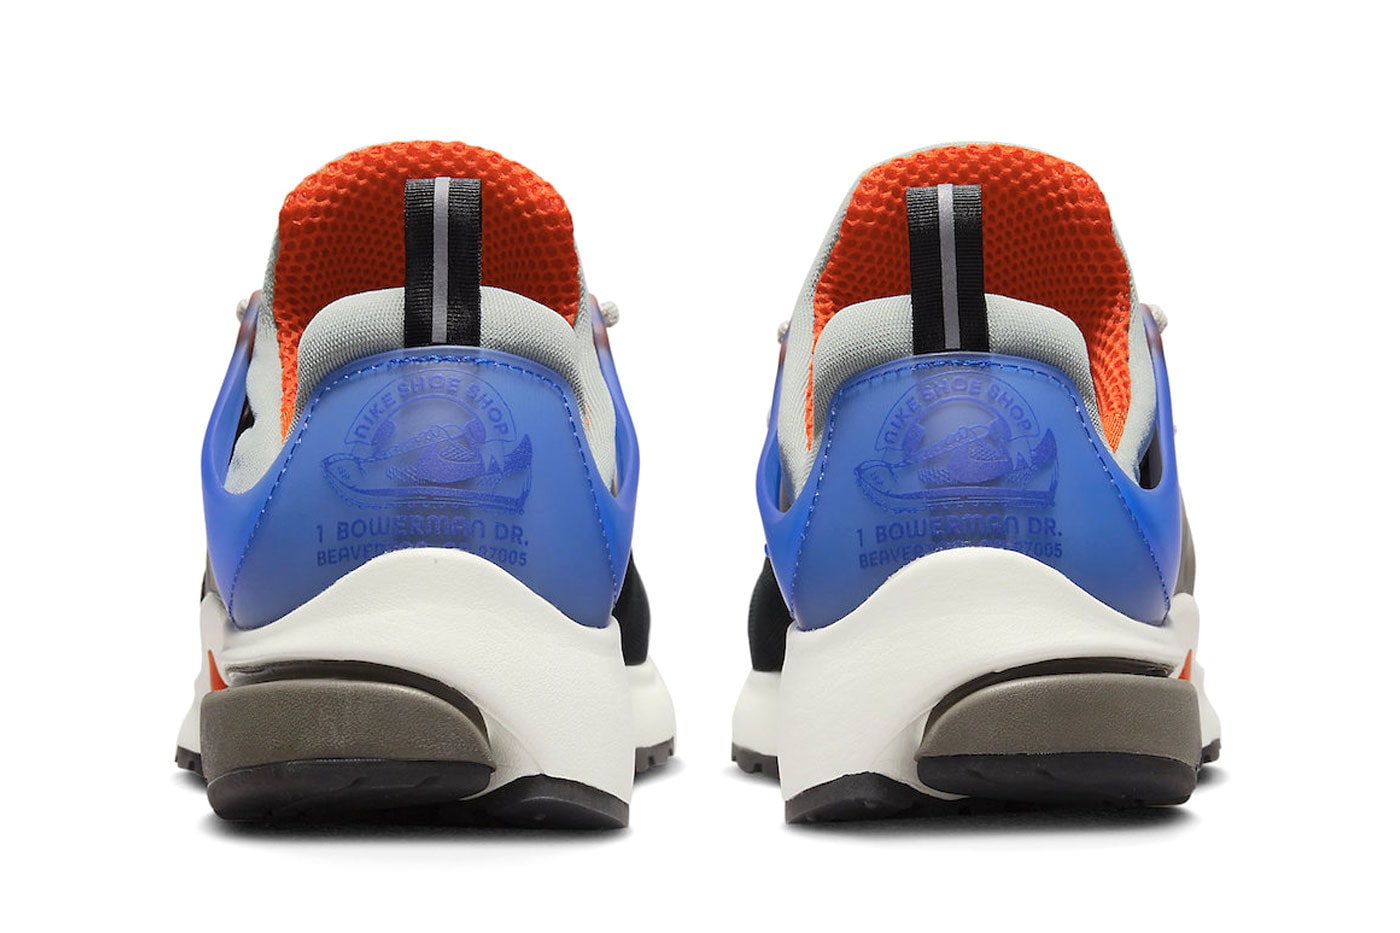 Nike Air Presto shoe shop official look summer 2022 black team orange dusty sage racer blue 130 usd release info date price